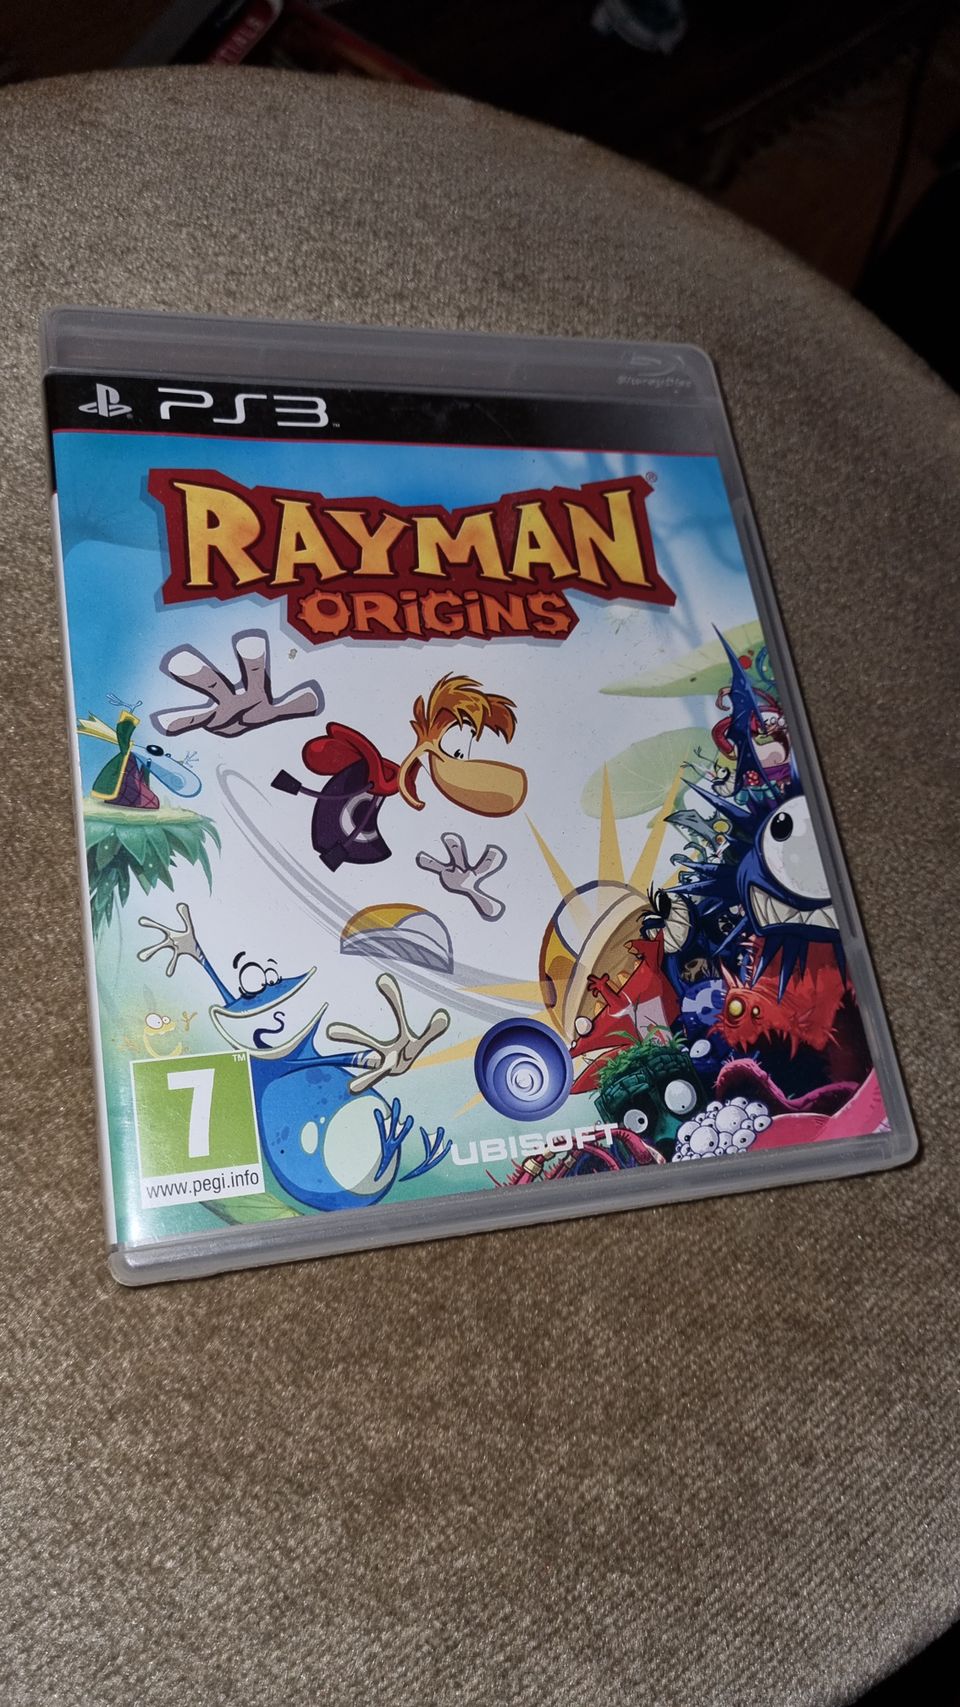 PS3/Playstation 3: Rayman Origins